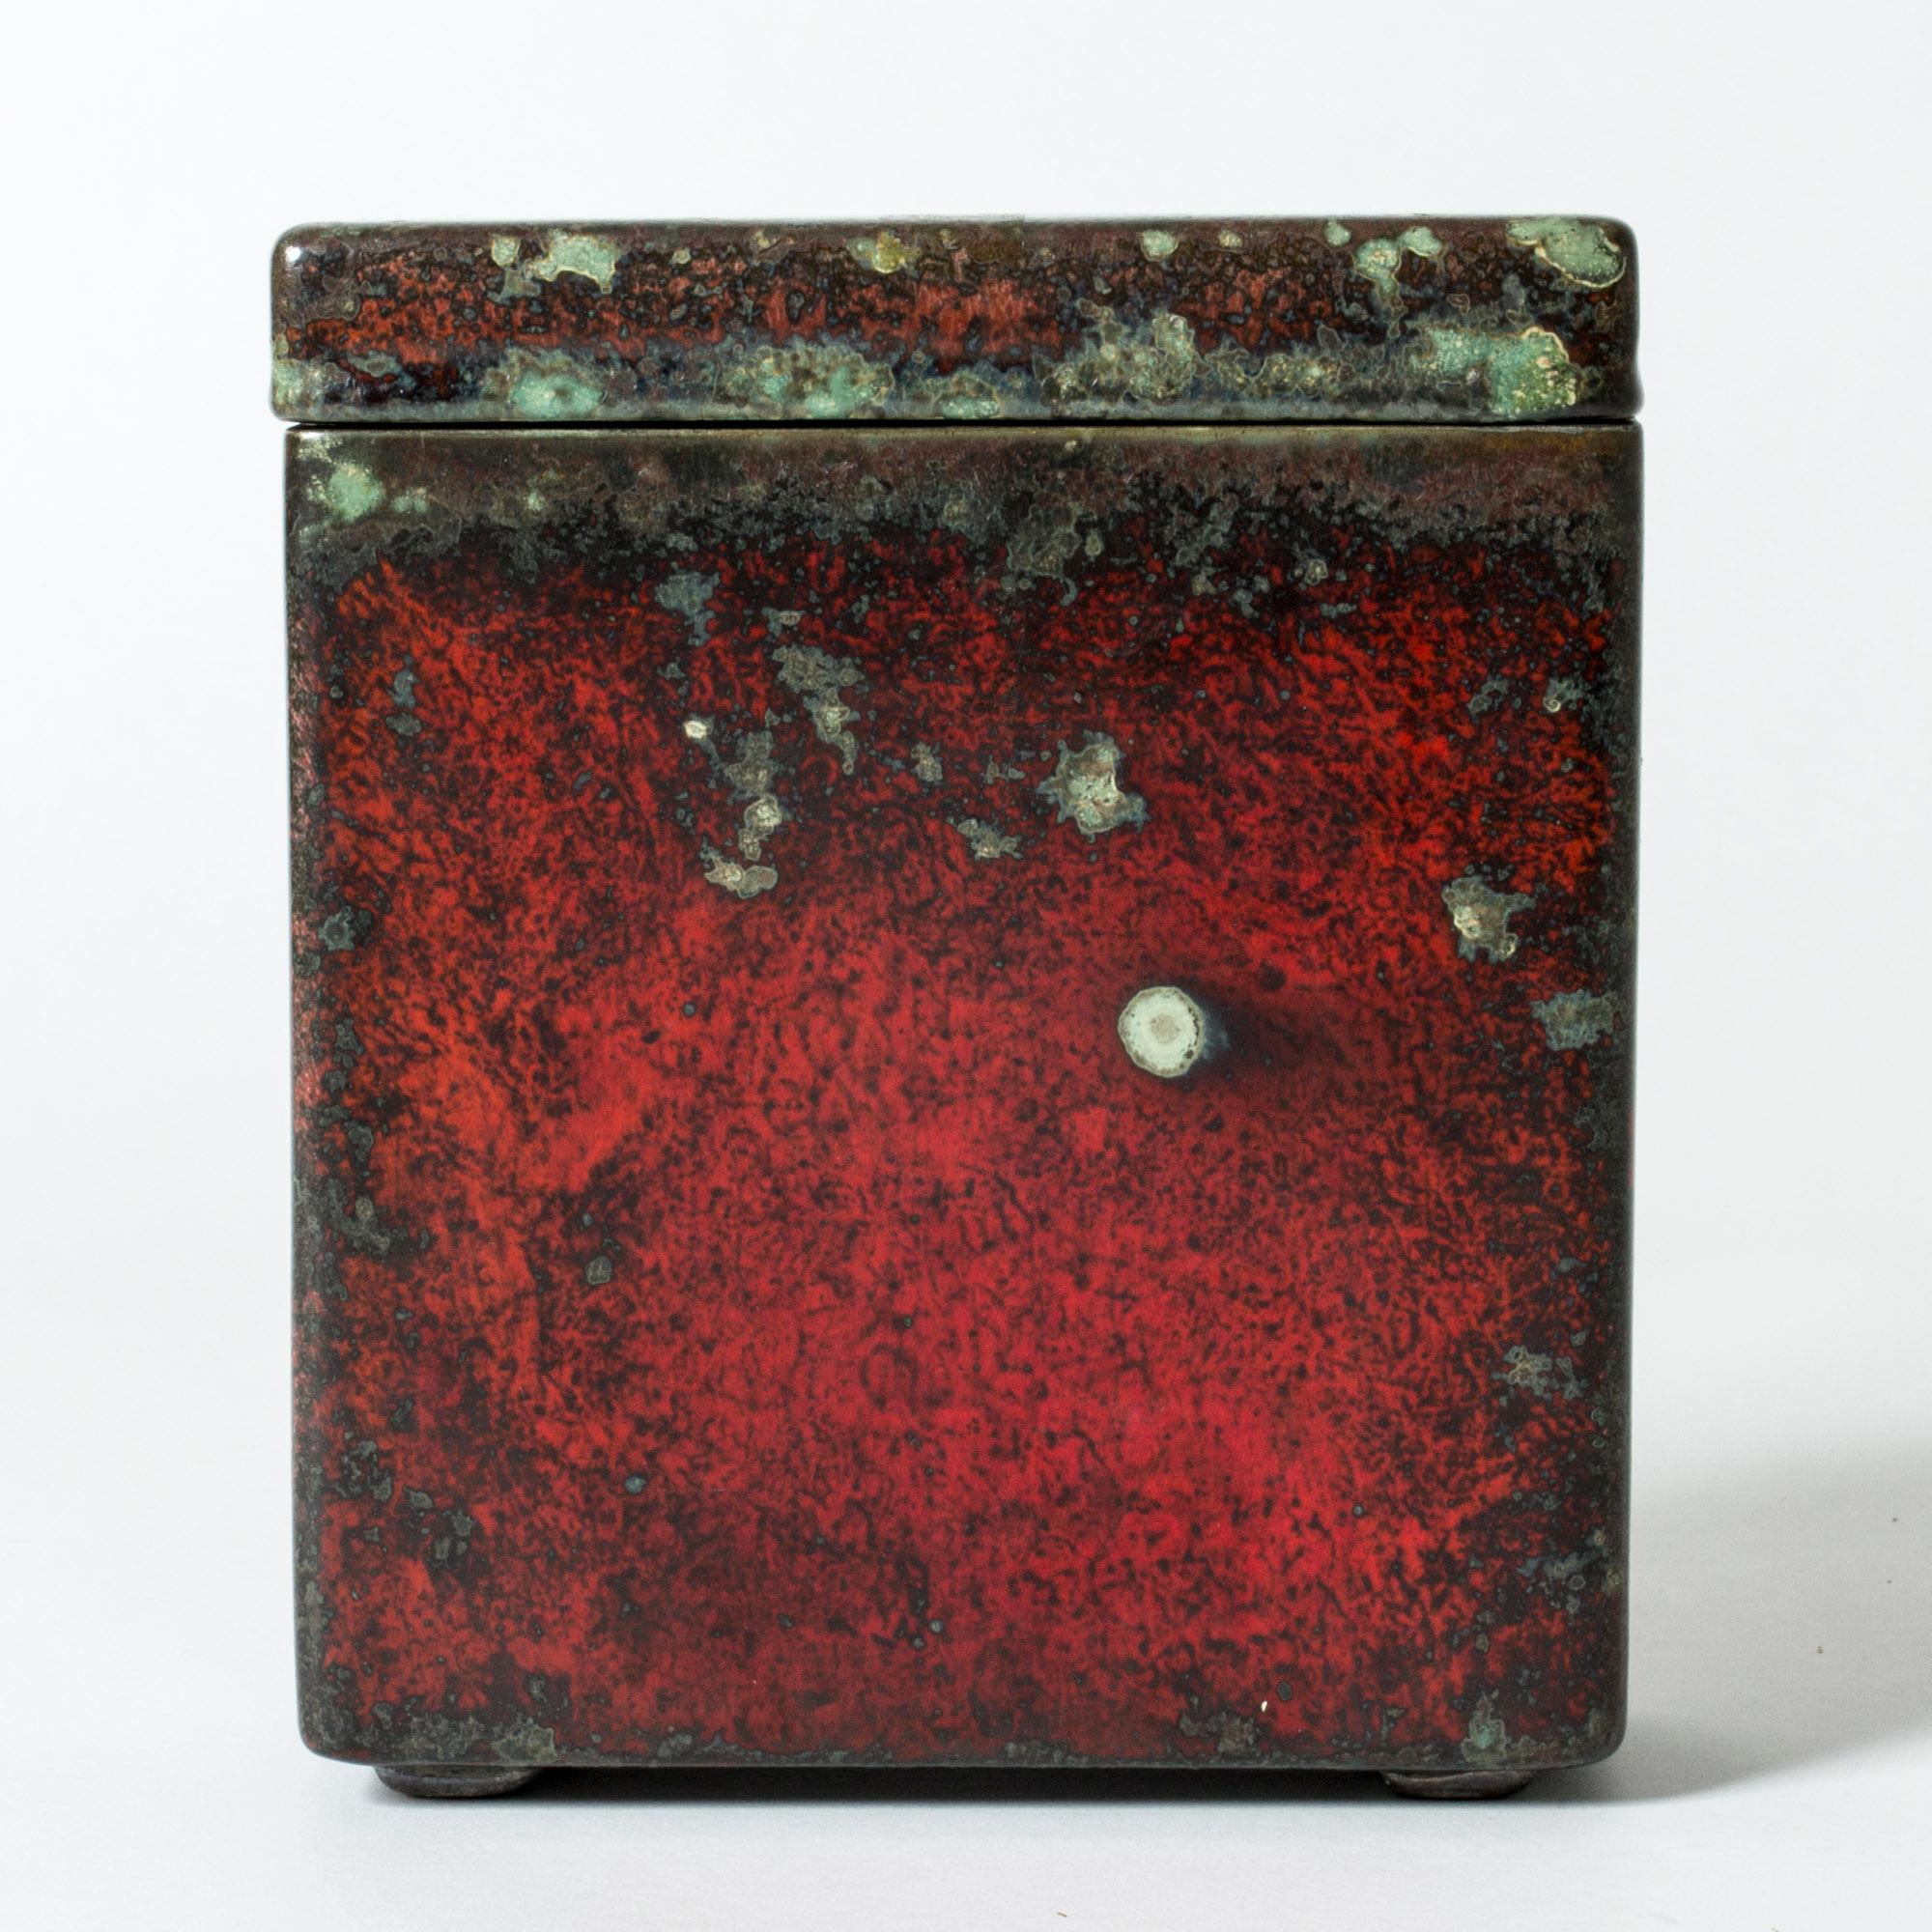 Faience lidded jar by Hans Hedberg, with striking majolica glaze. Angular form with a rustic look. Deep red glaze with greenish, lichen like flecks.